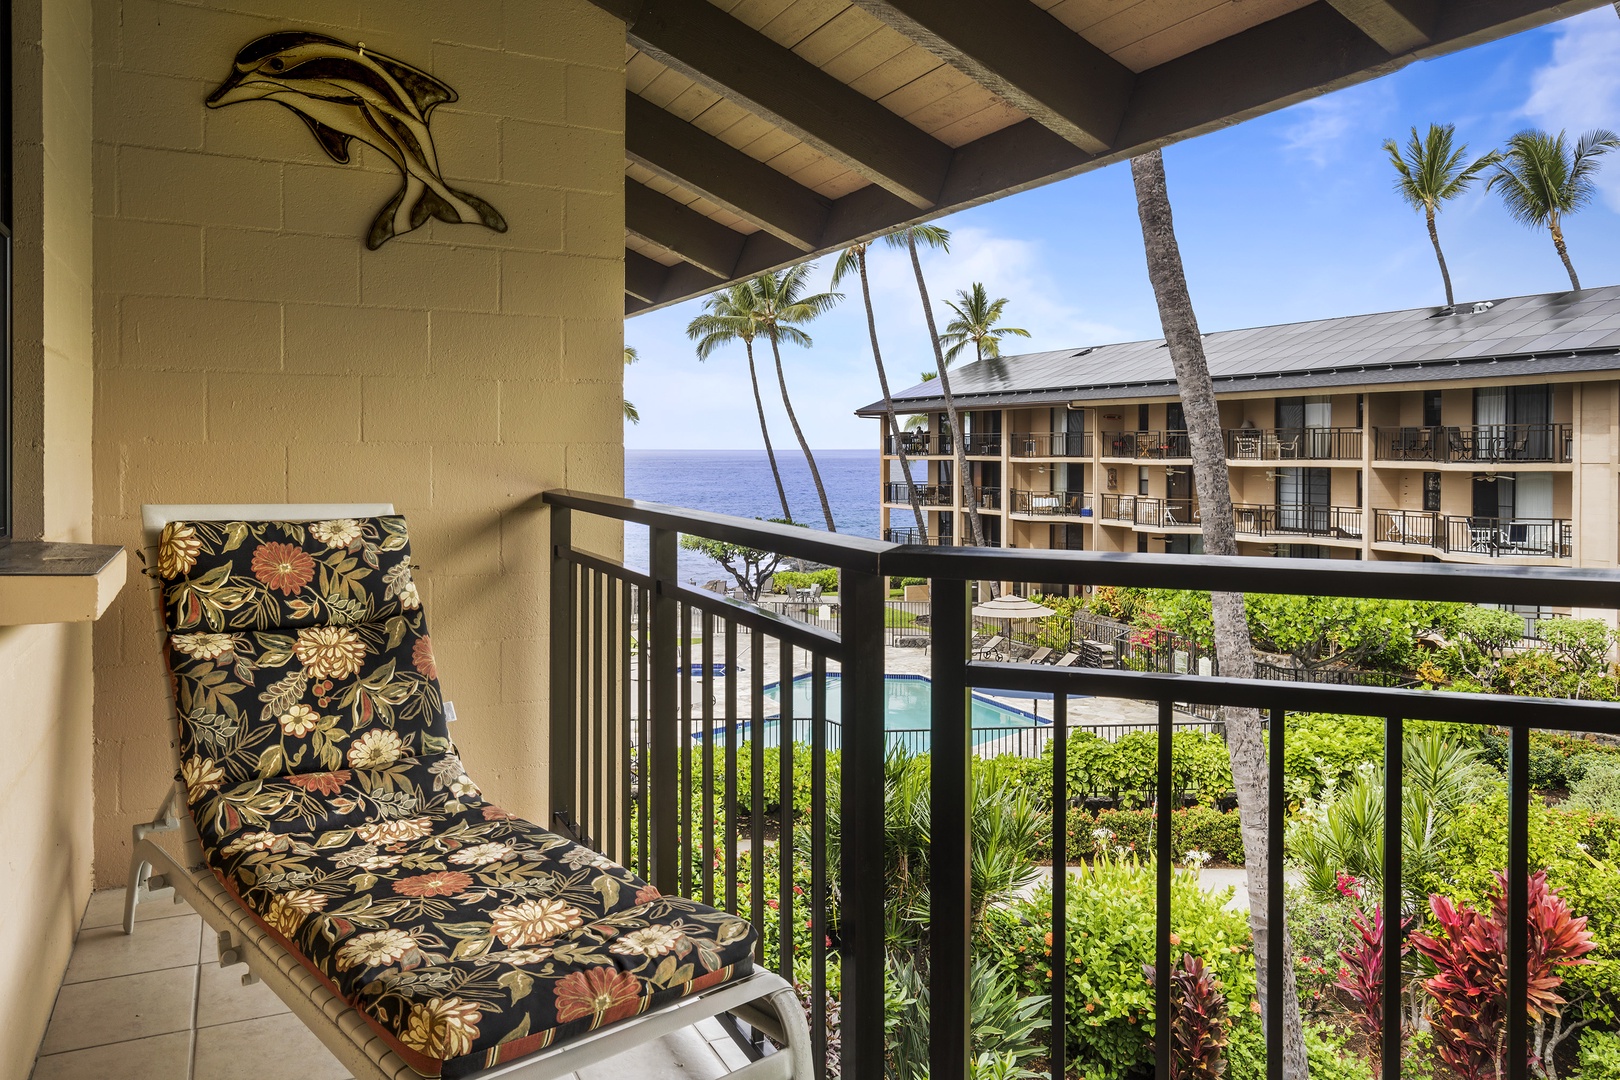 Kailua Kona Vacation Rentals, Kona Makai 2303 - Lounge on the Lanai just steps from the unit